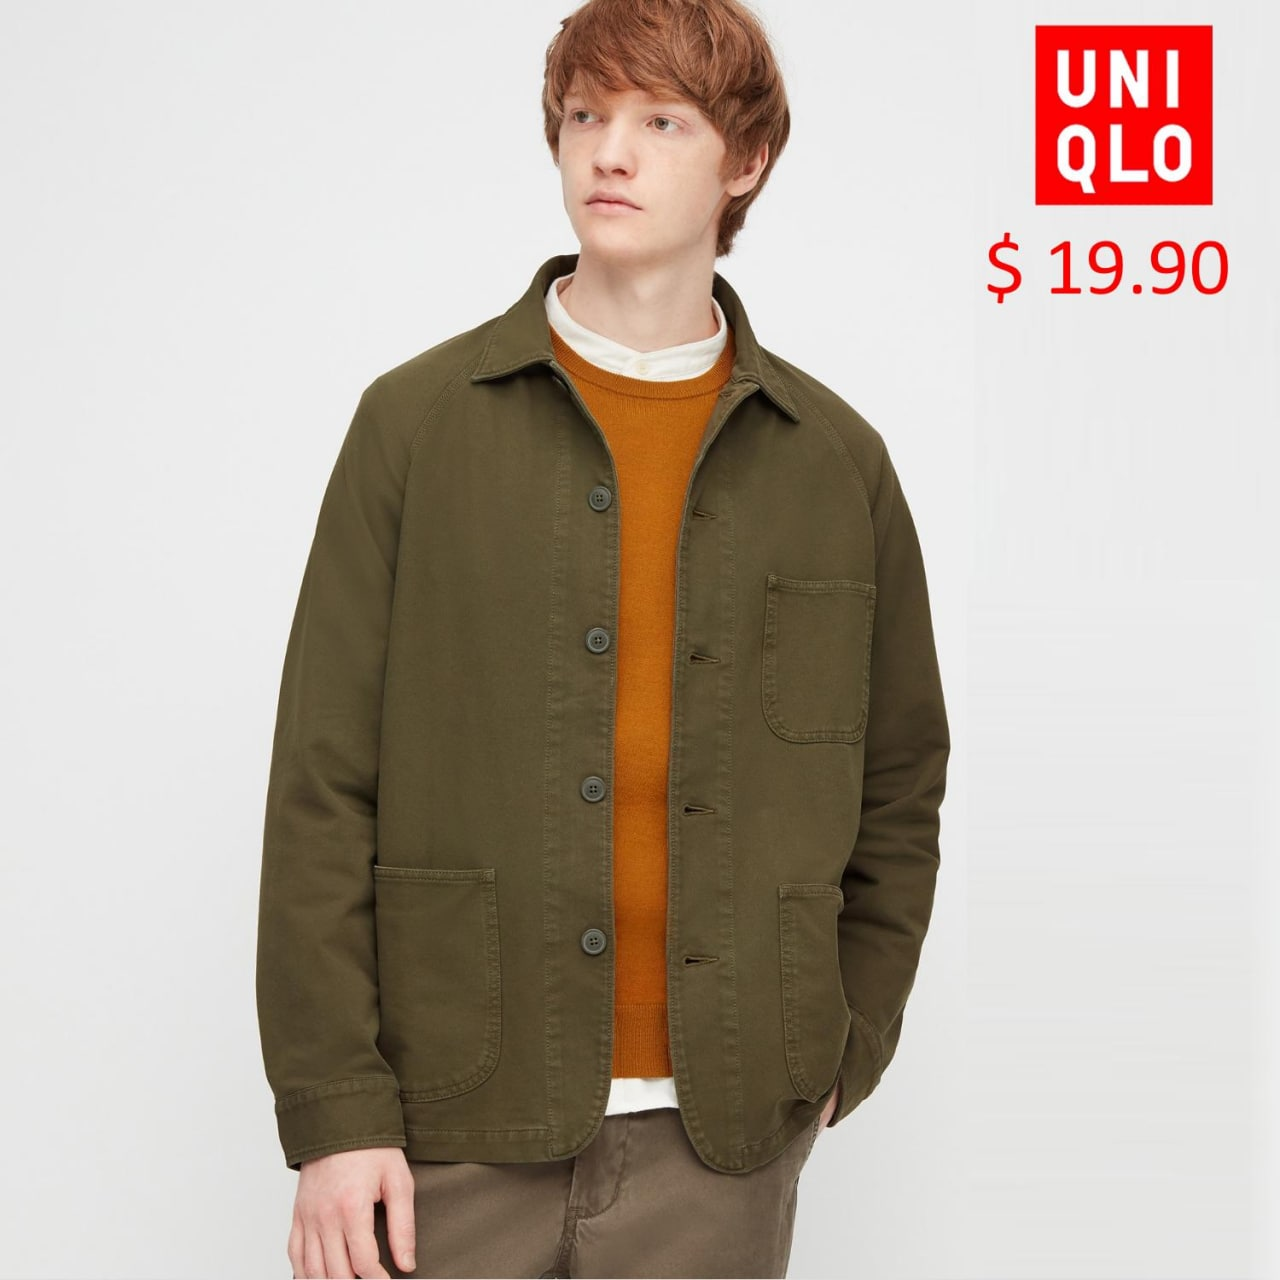 Куртка uniqlo мужская. Куртка рубашка Uniqlo. Куртка Uniqlo зеленая мужская. Юникло куртка-рубашка зеленая мужская. Uniqlo work Jacket.